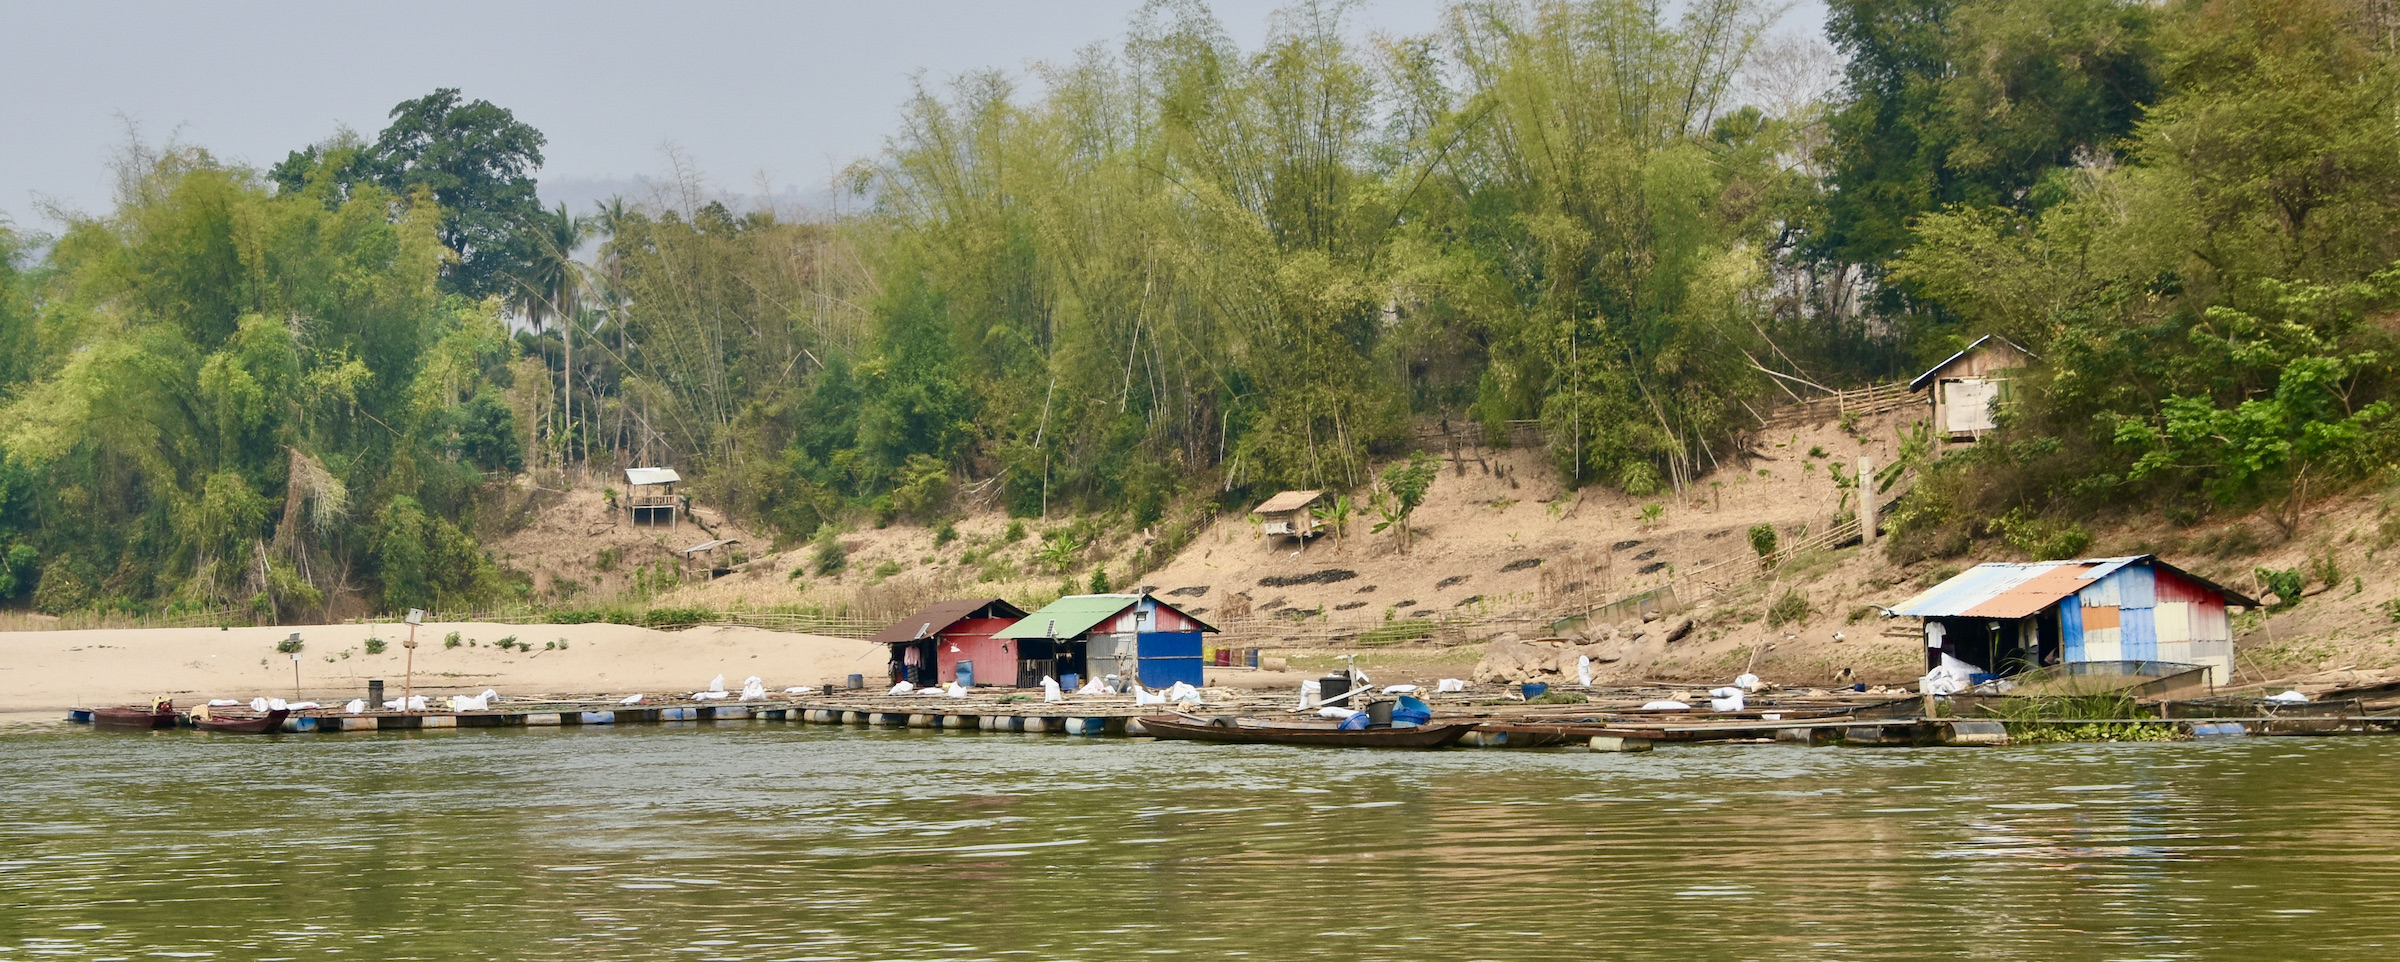  Tilapia Farm on the Mekong River